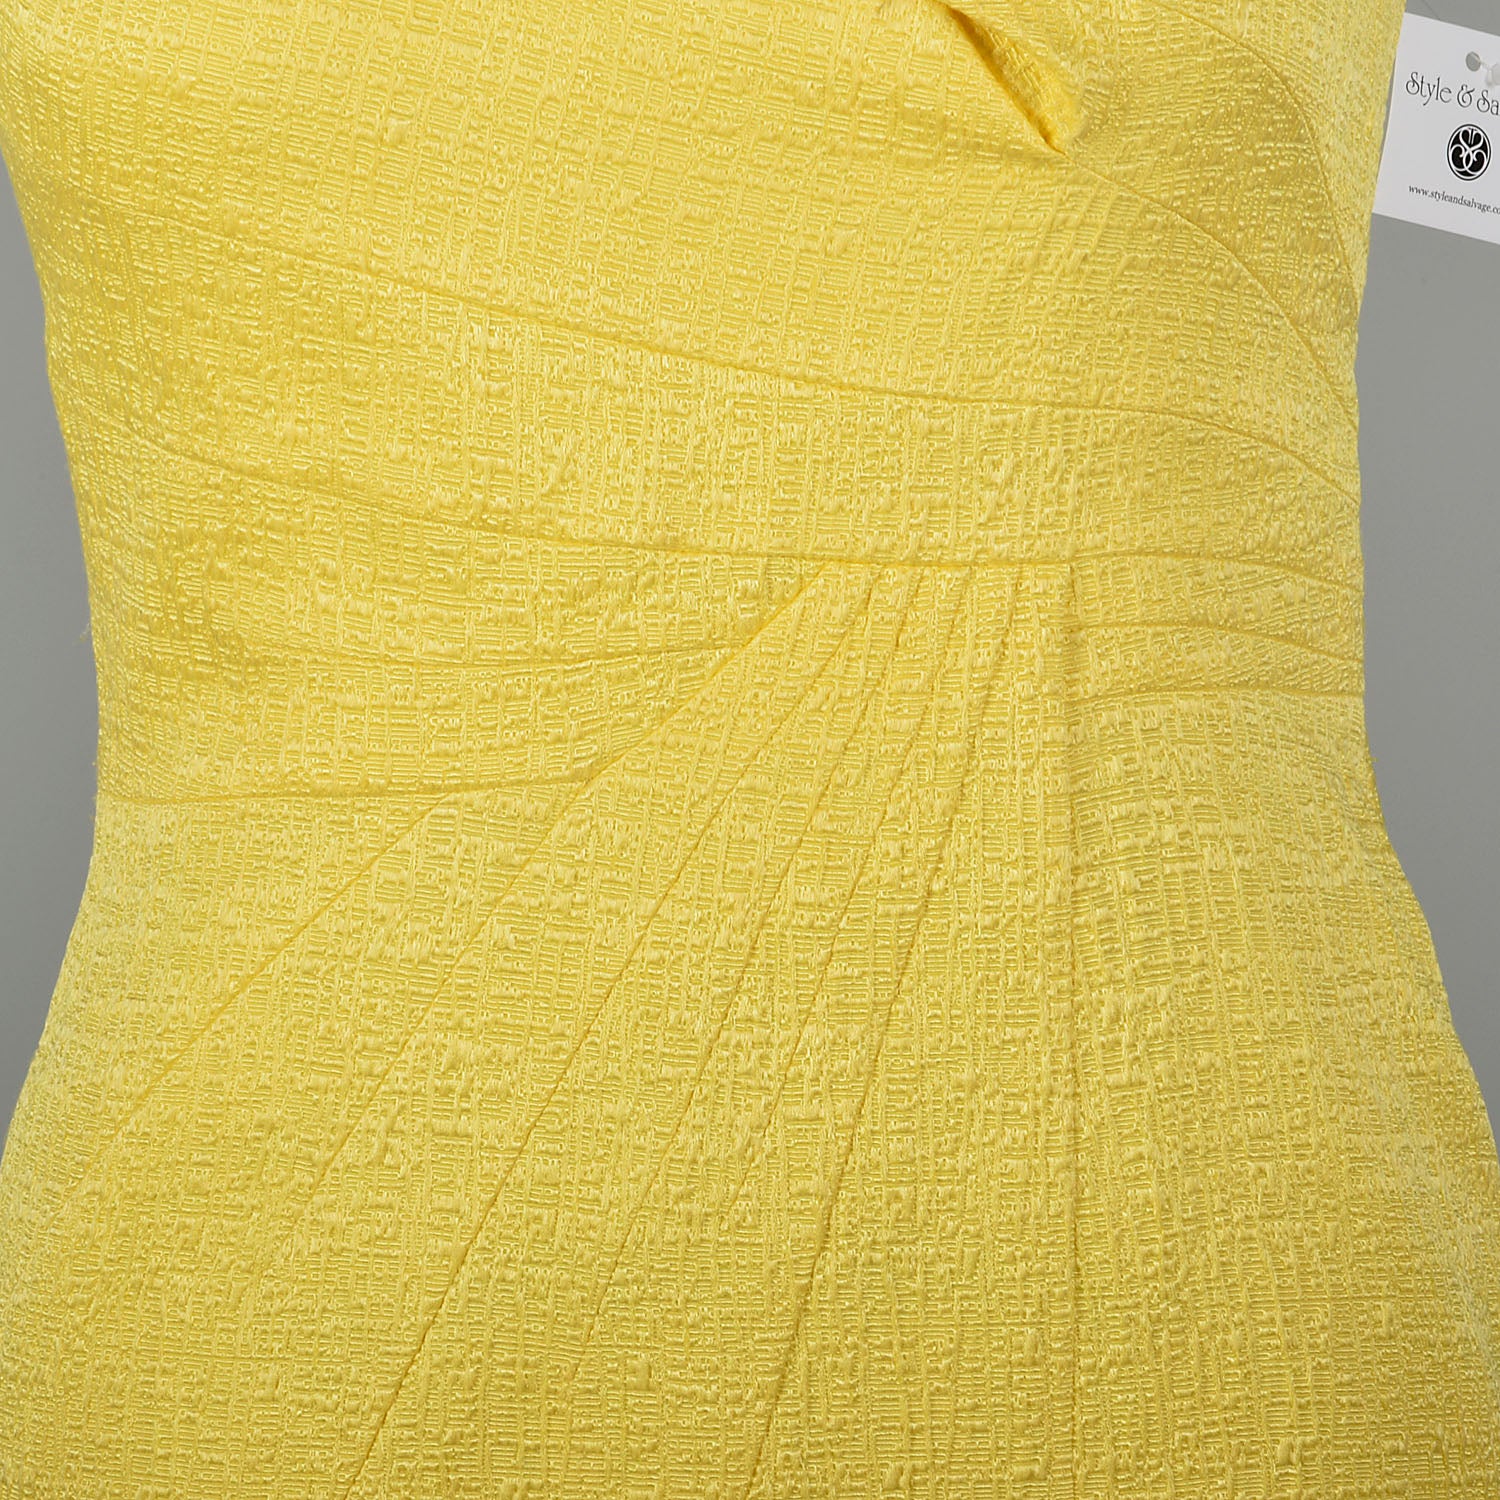 XL 2000s Oscar de la Renta Yellow Fitted Sheath Sleeveless Asymmetrical Dress